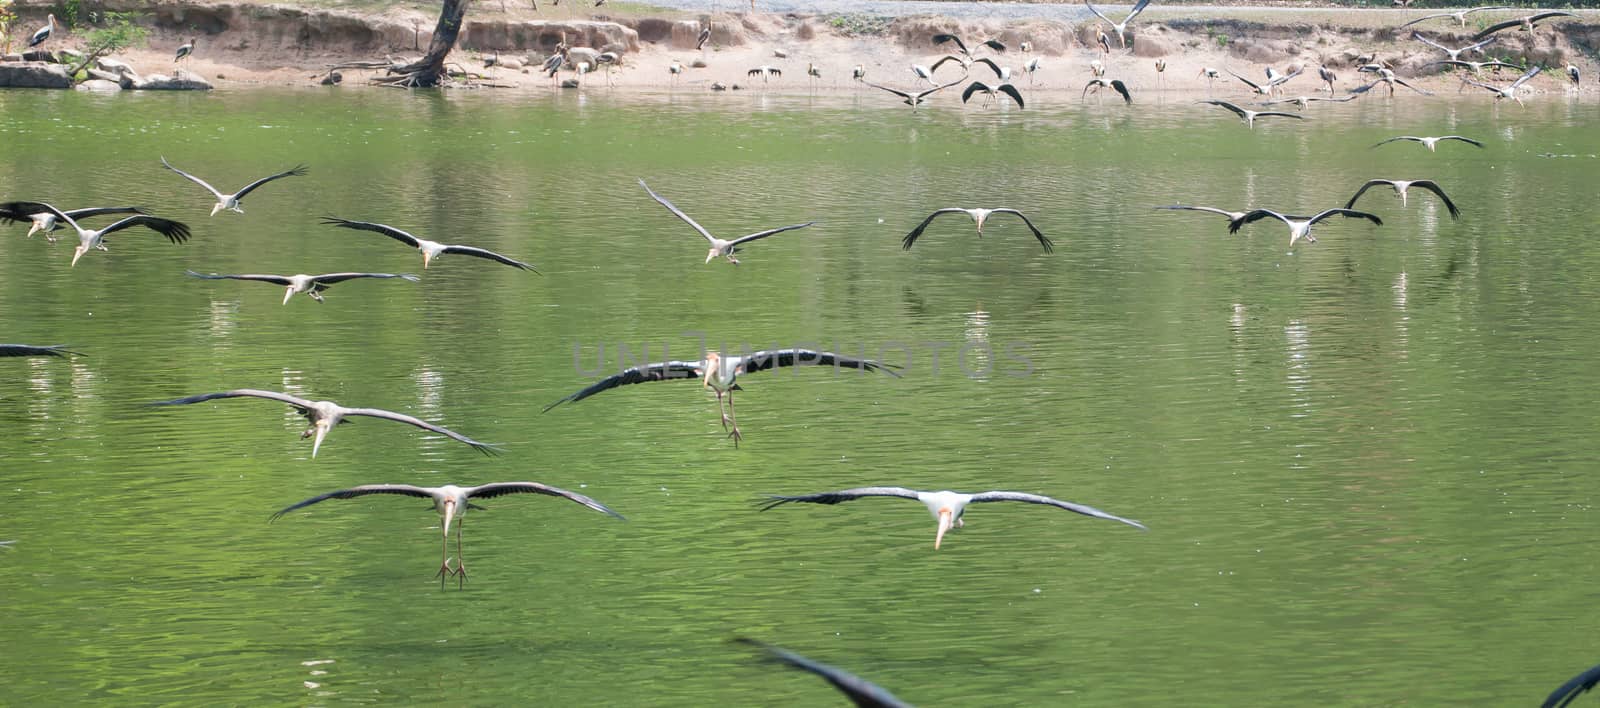 Masses Kabbaw bird during fly cross lagoon